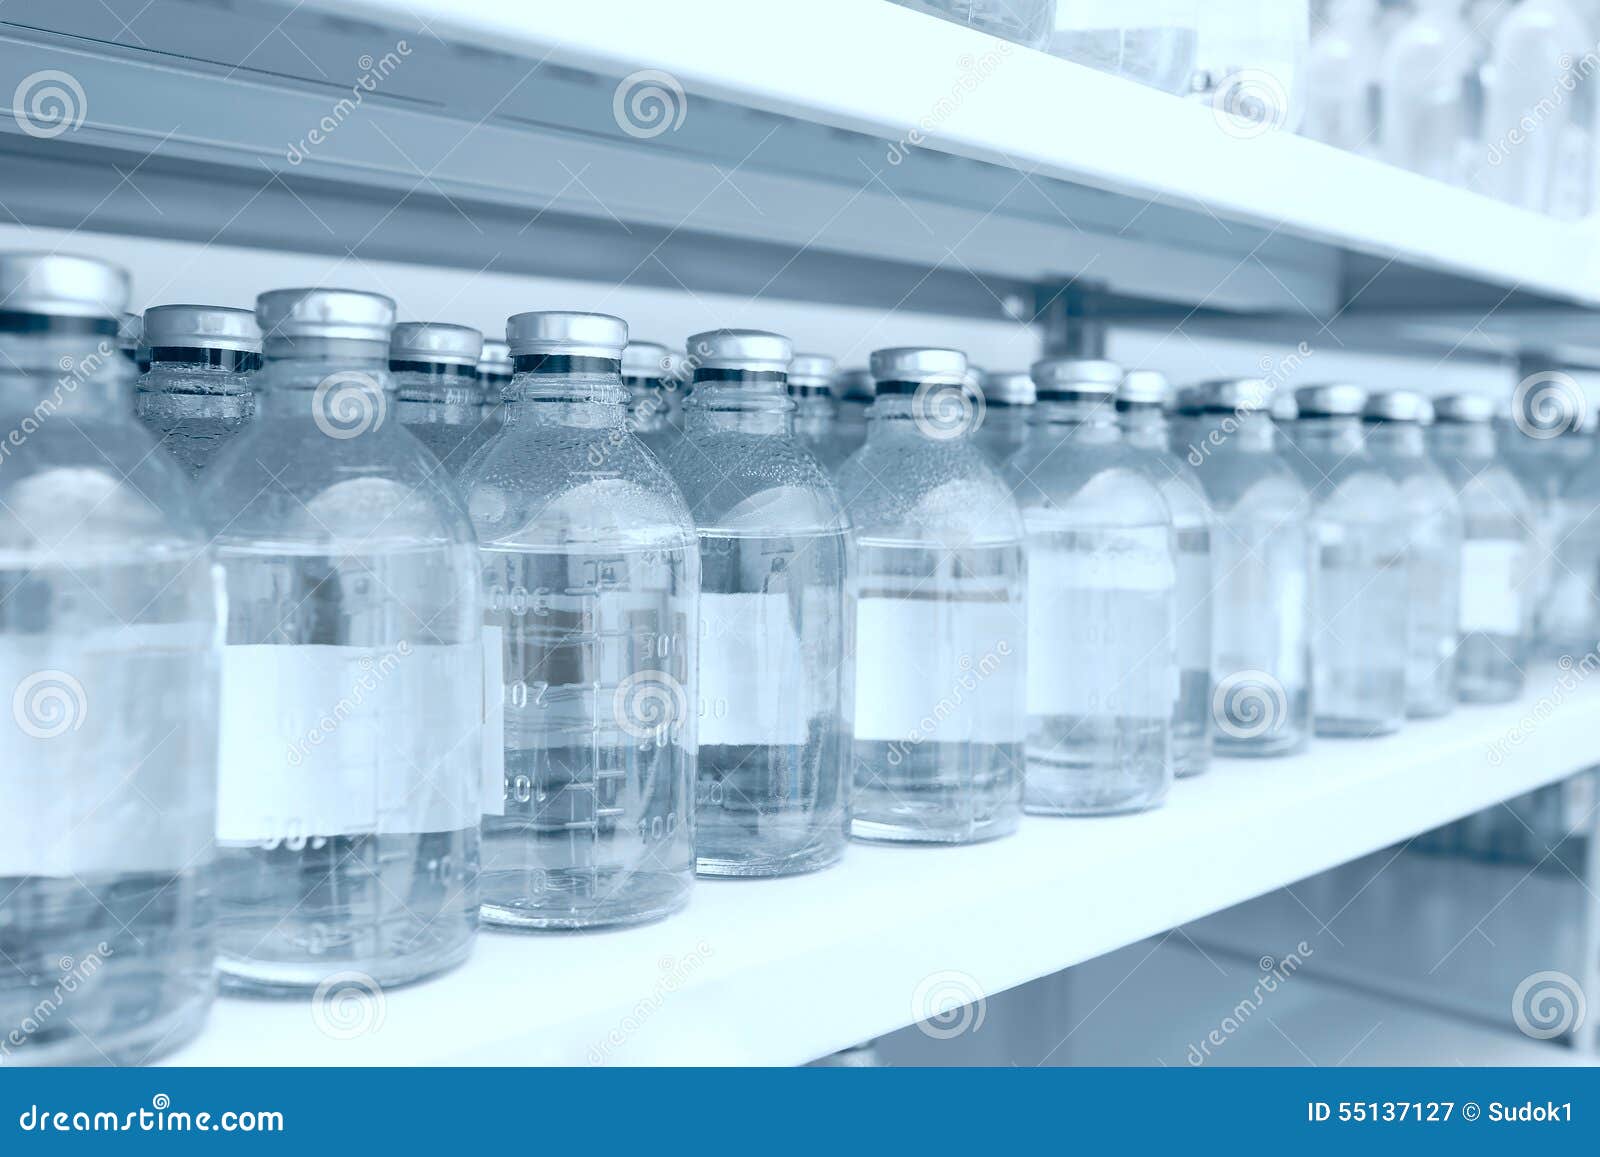 Medicine Bottles in Row on Storage Shelf Stock Image - Image of